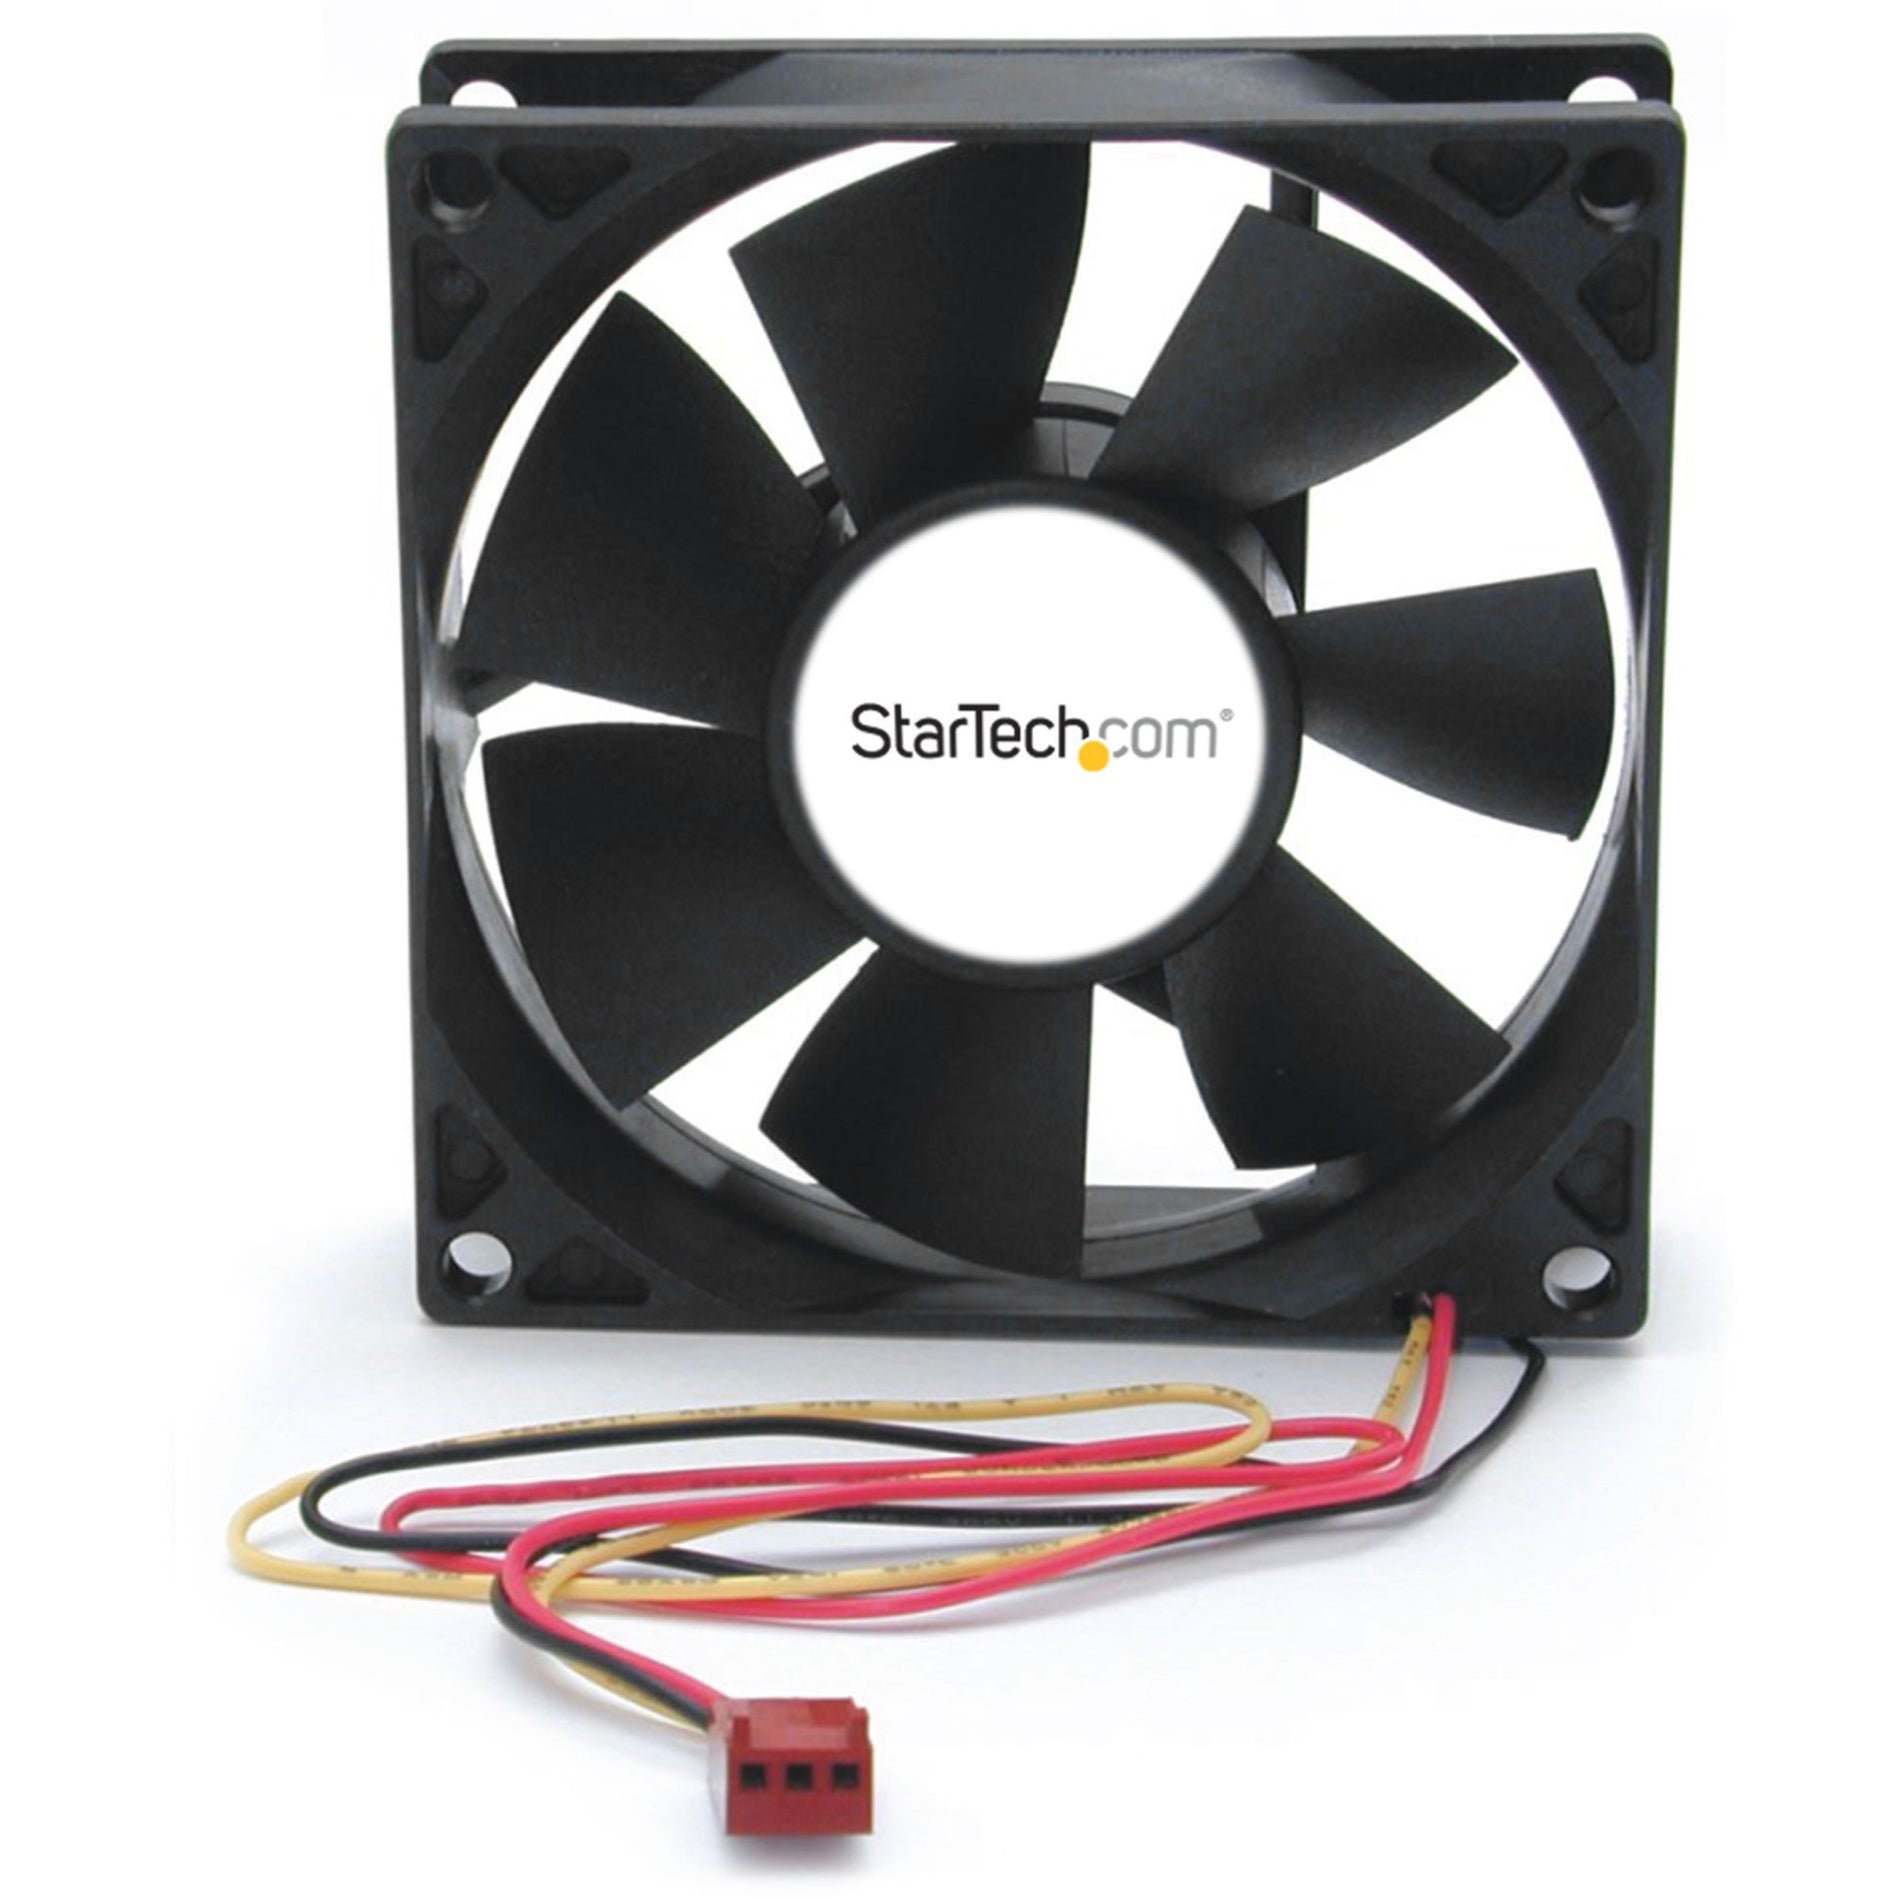 StarTech.com FANBOX2 80mm Dual Ball Bearing Computer Case Fan, RPM Sensor, 3-lead Connector, 2-Year Warranty